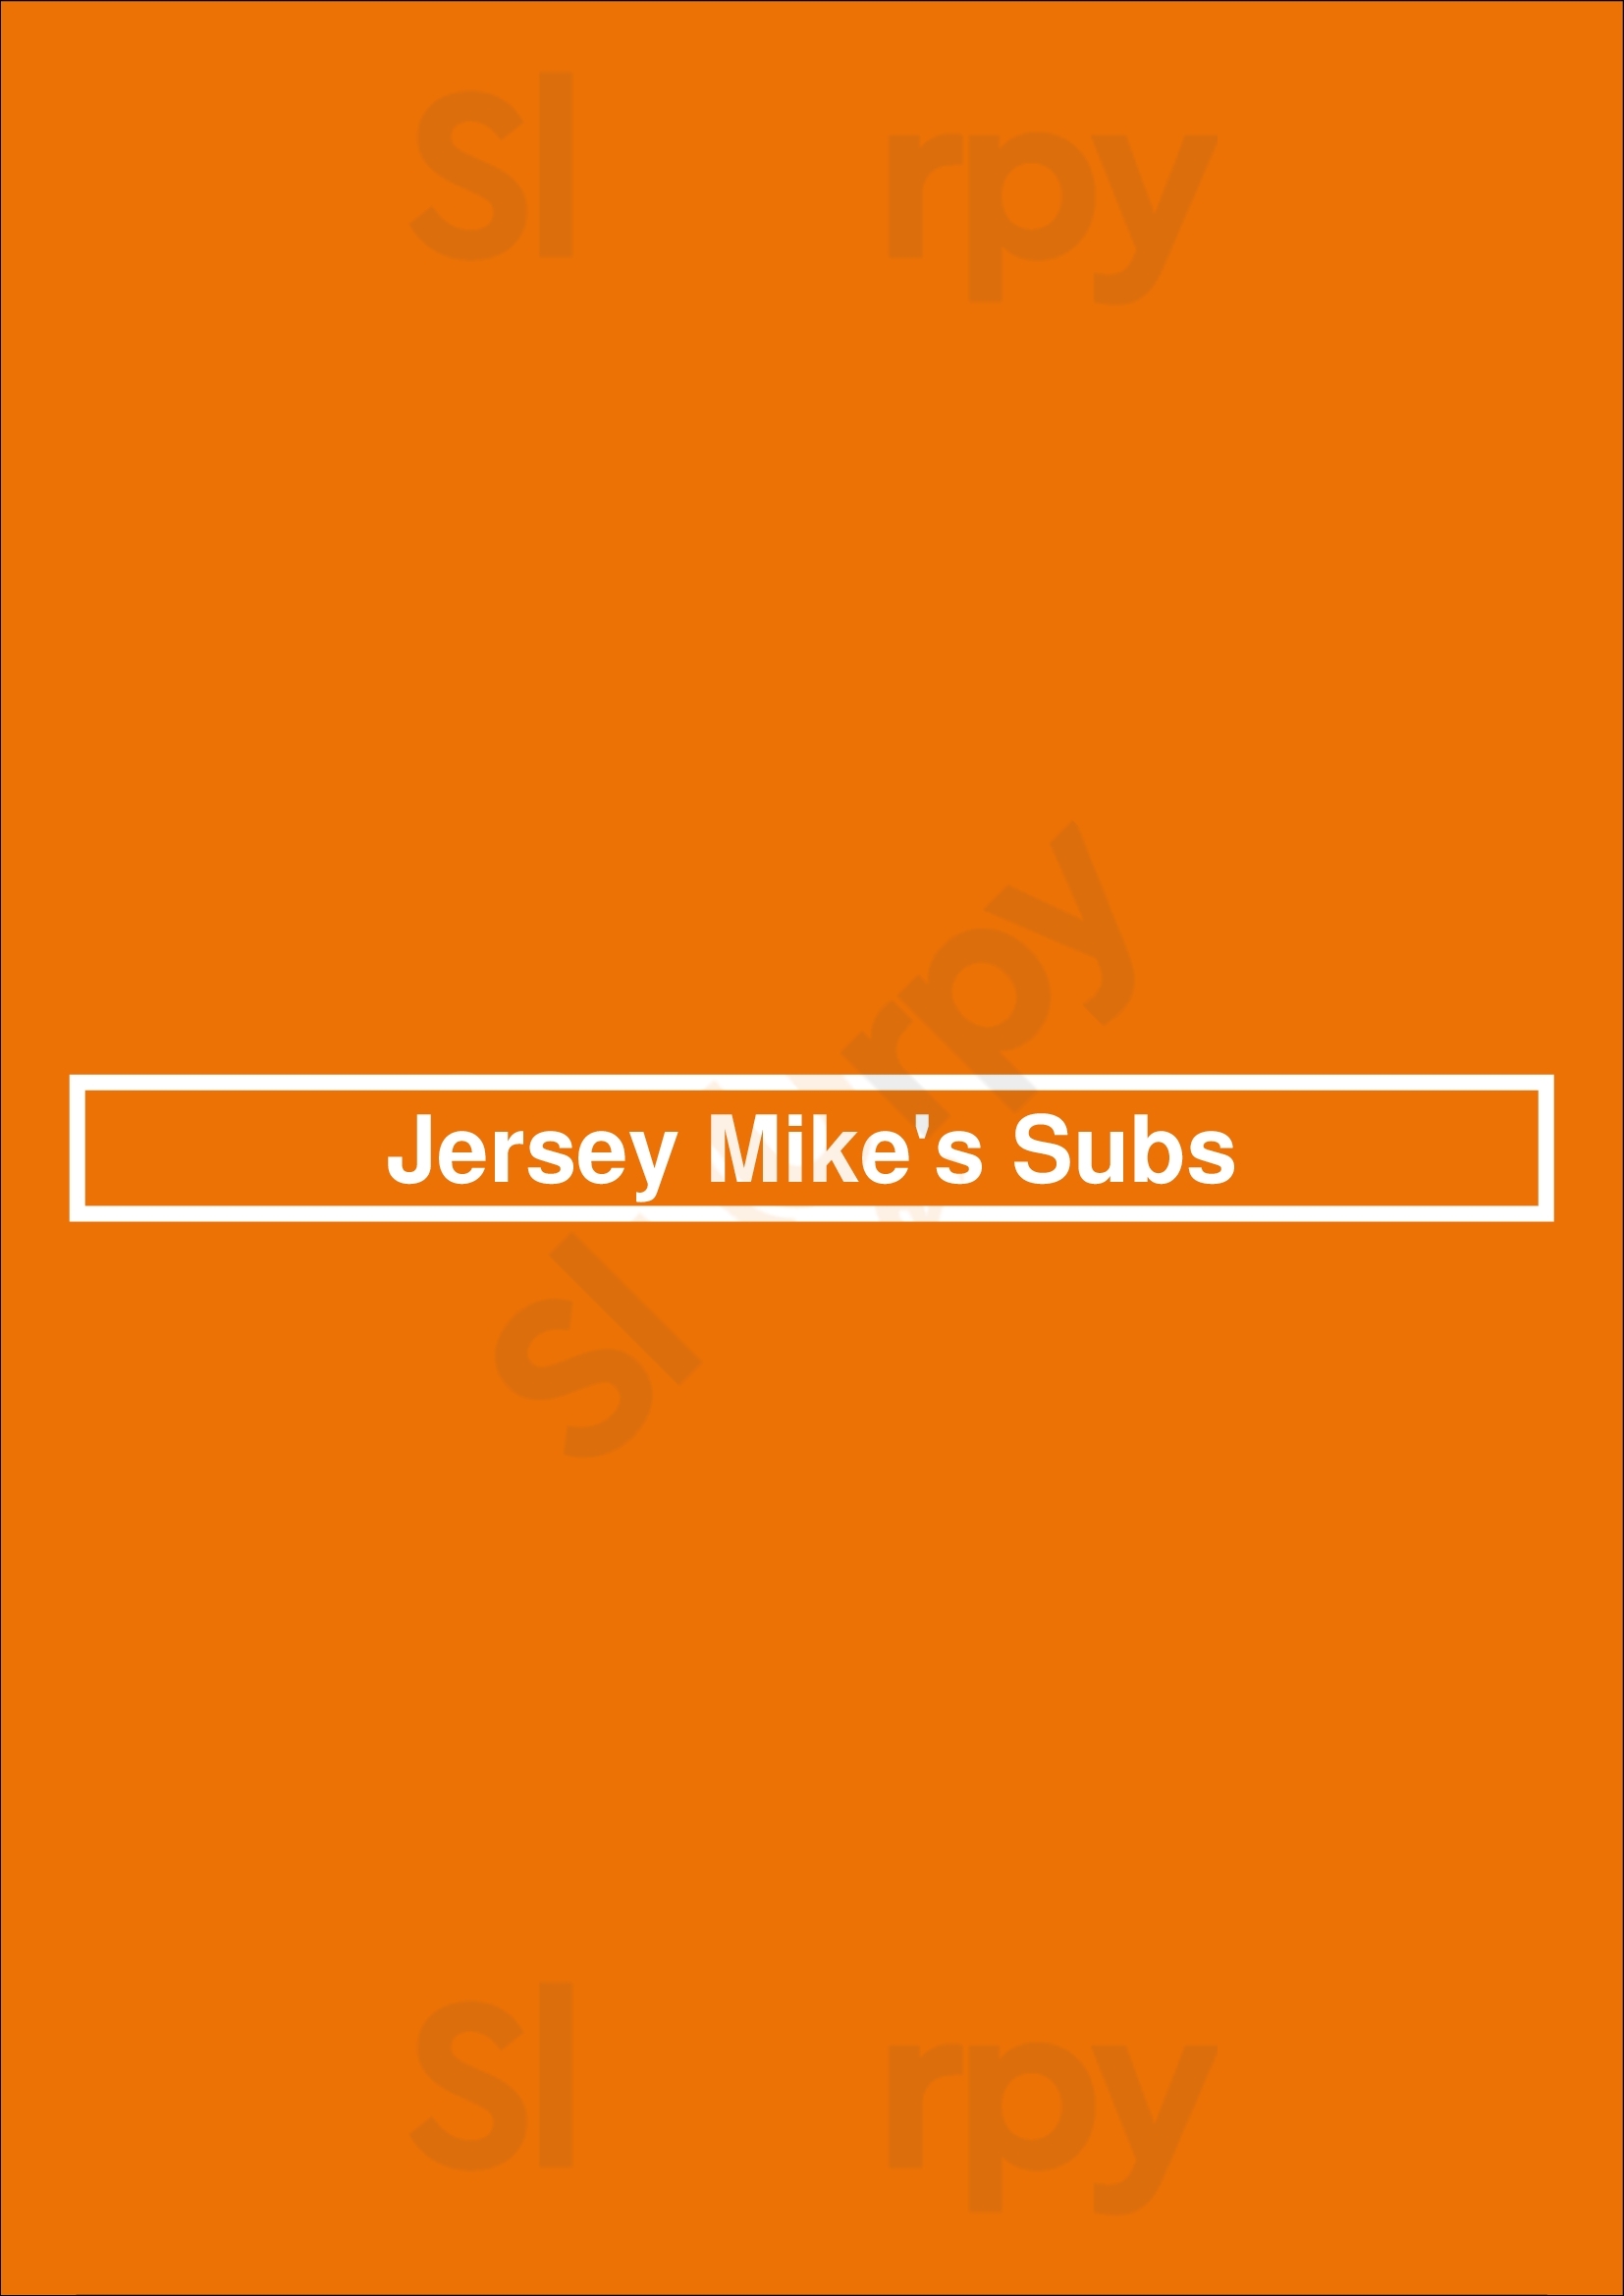 Jersey Mike's Subs Wilmington Menu - 1